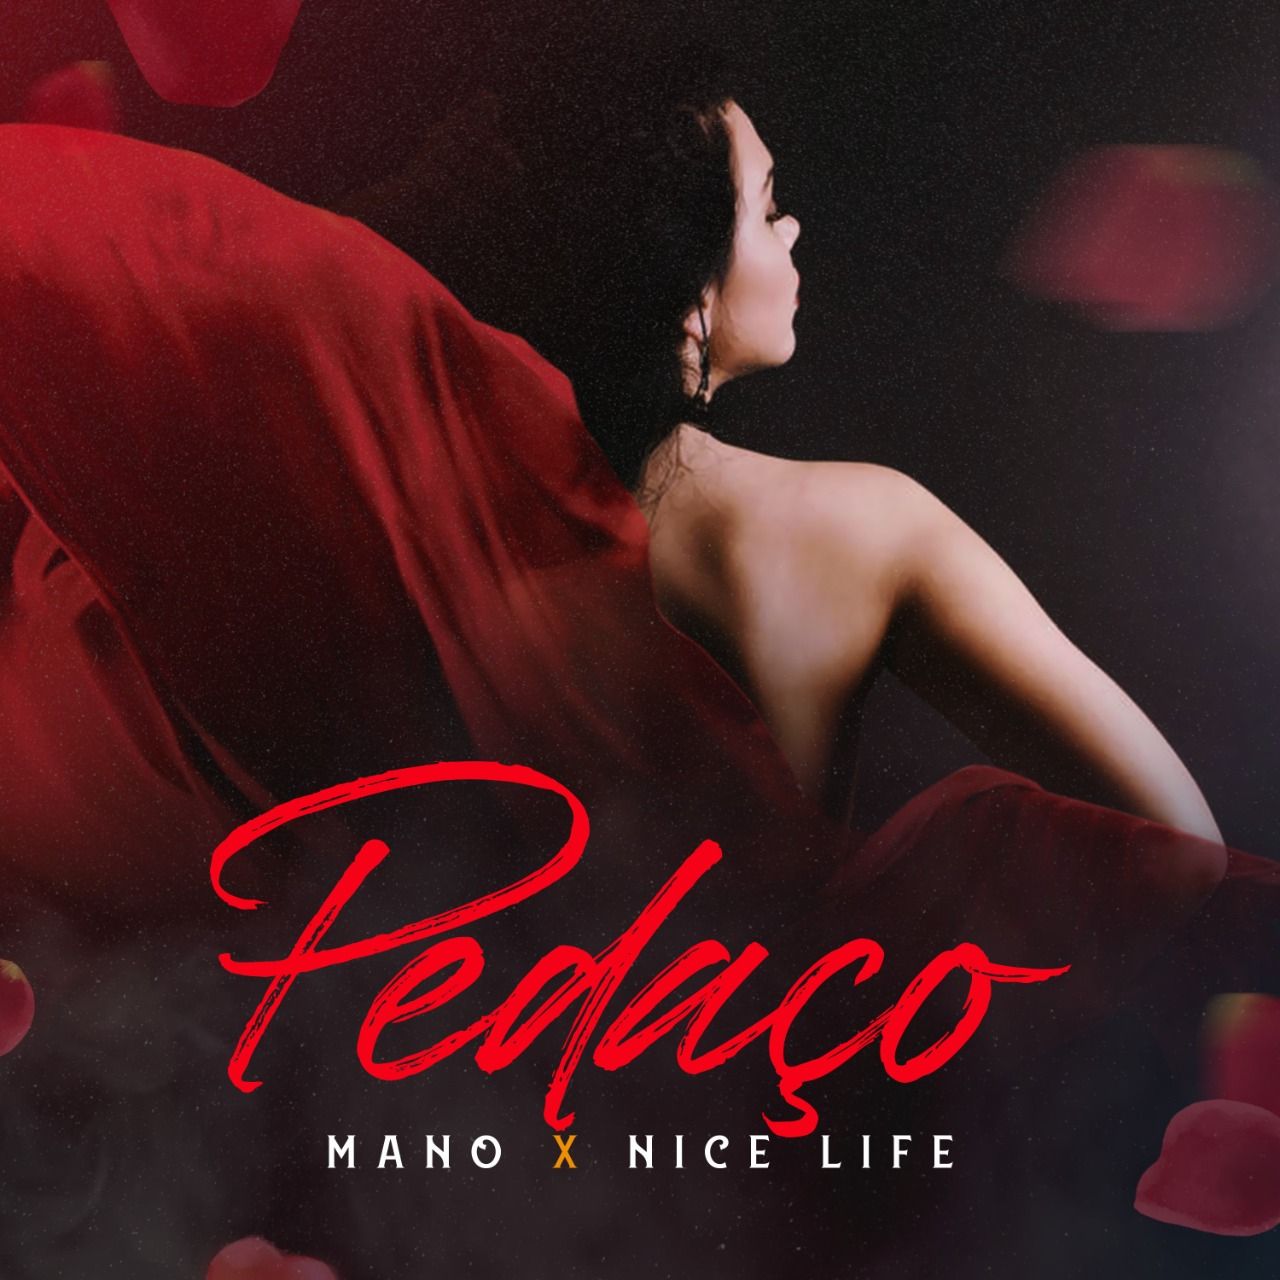 Tải xuống Mano X Nice Life - Pedaco